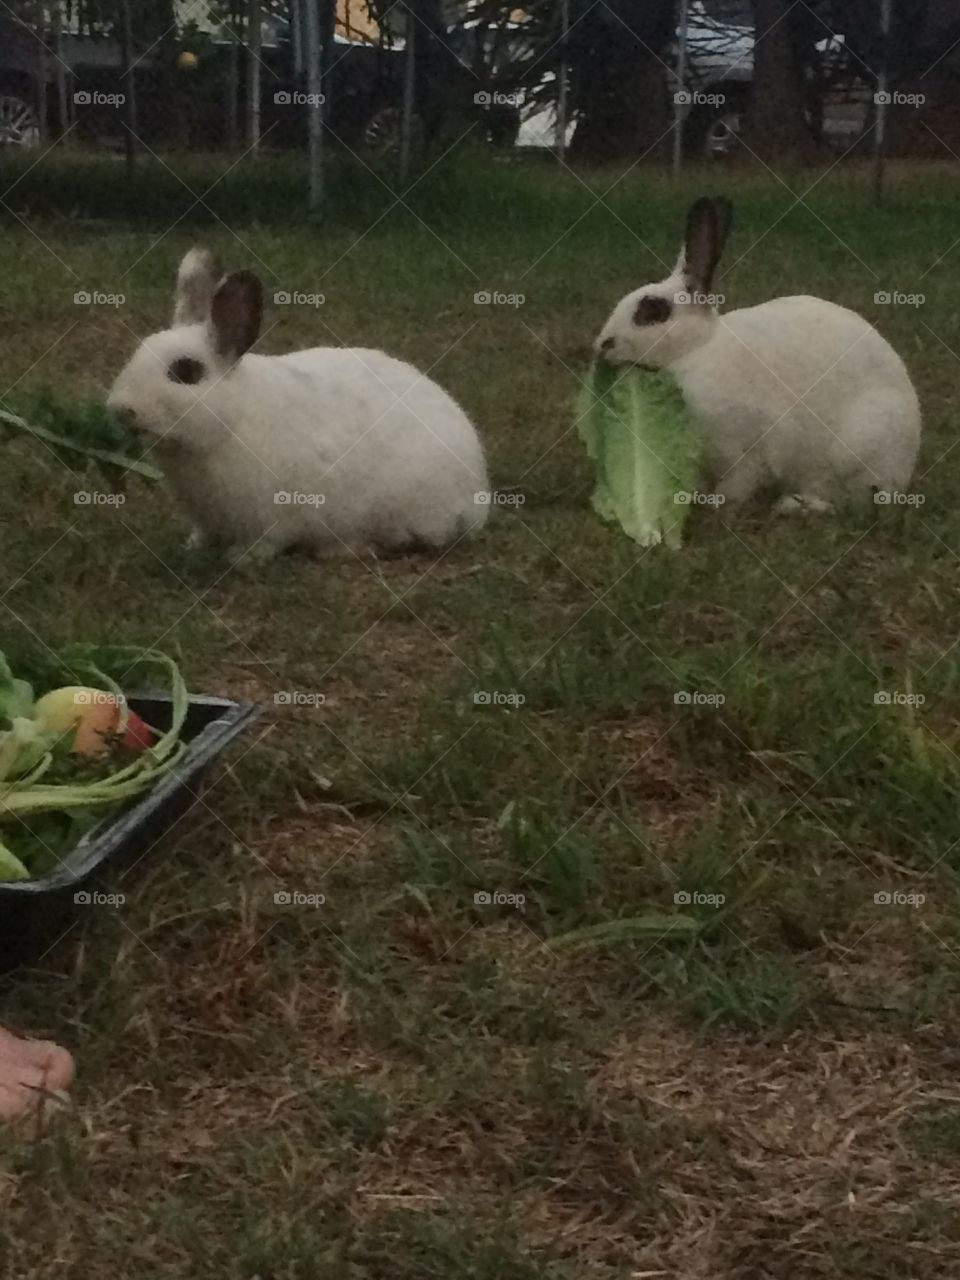 Two white bunnies running free